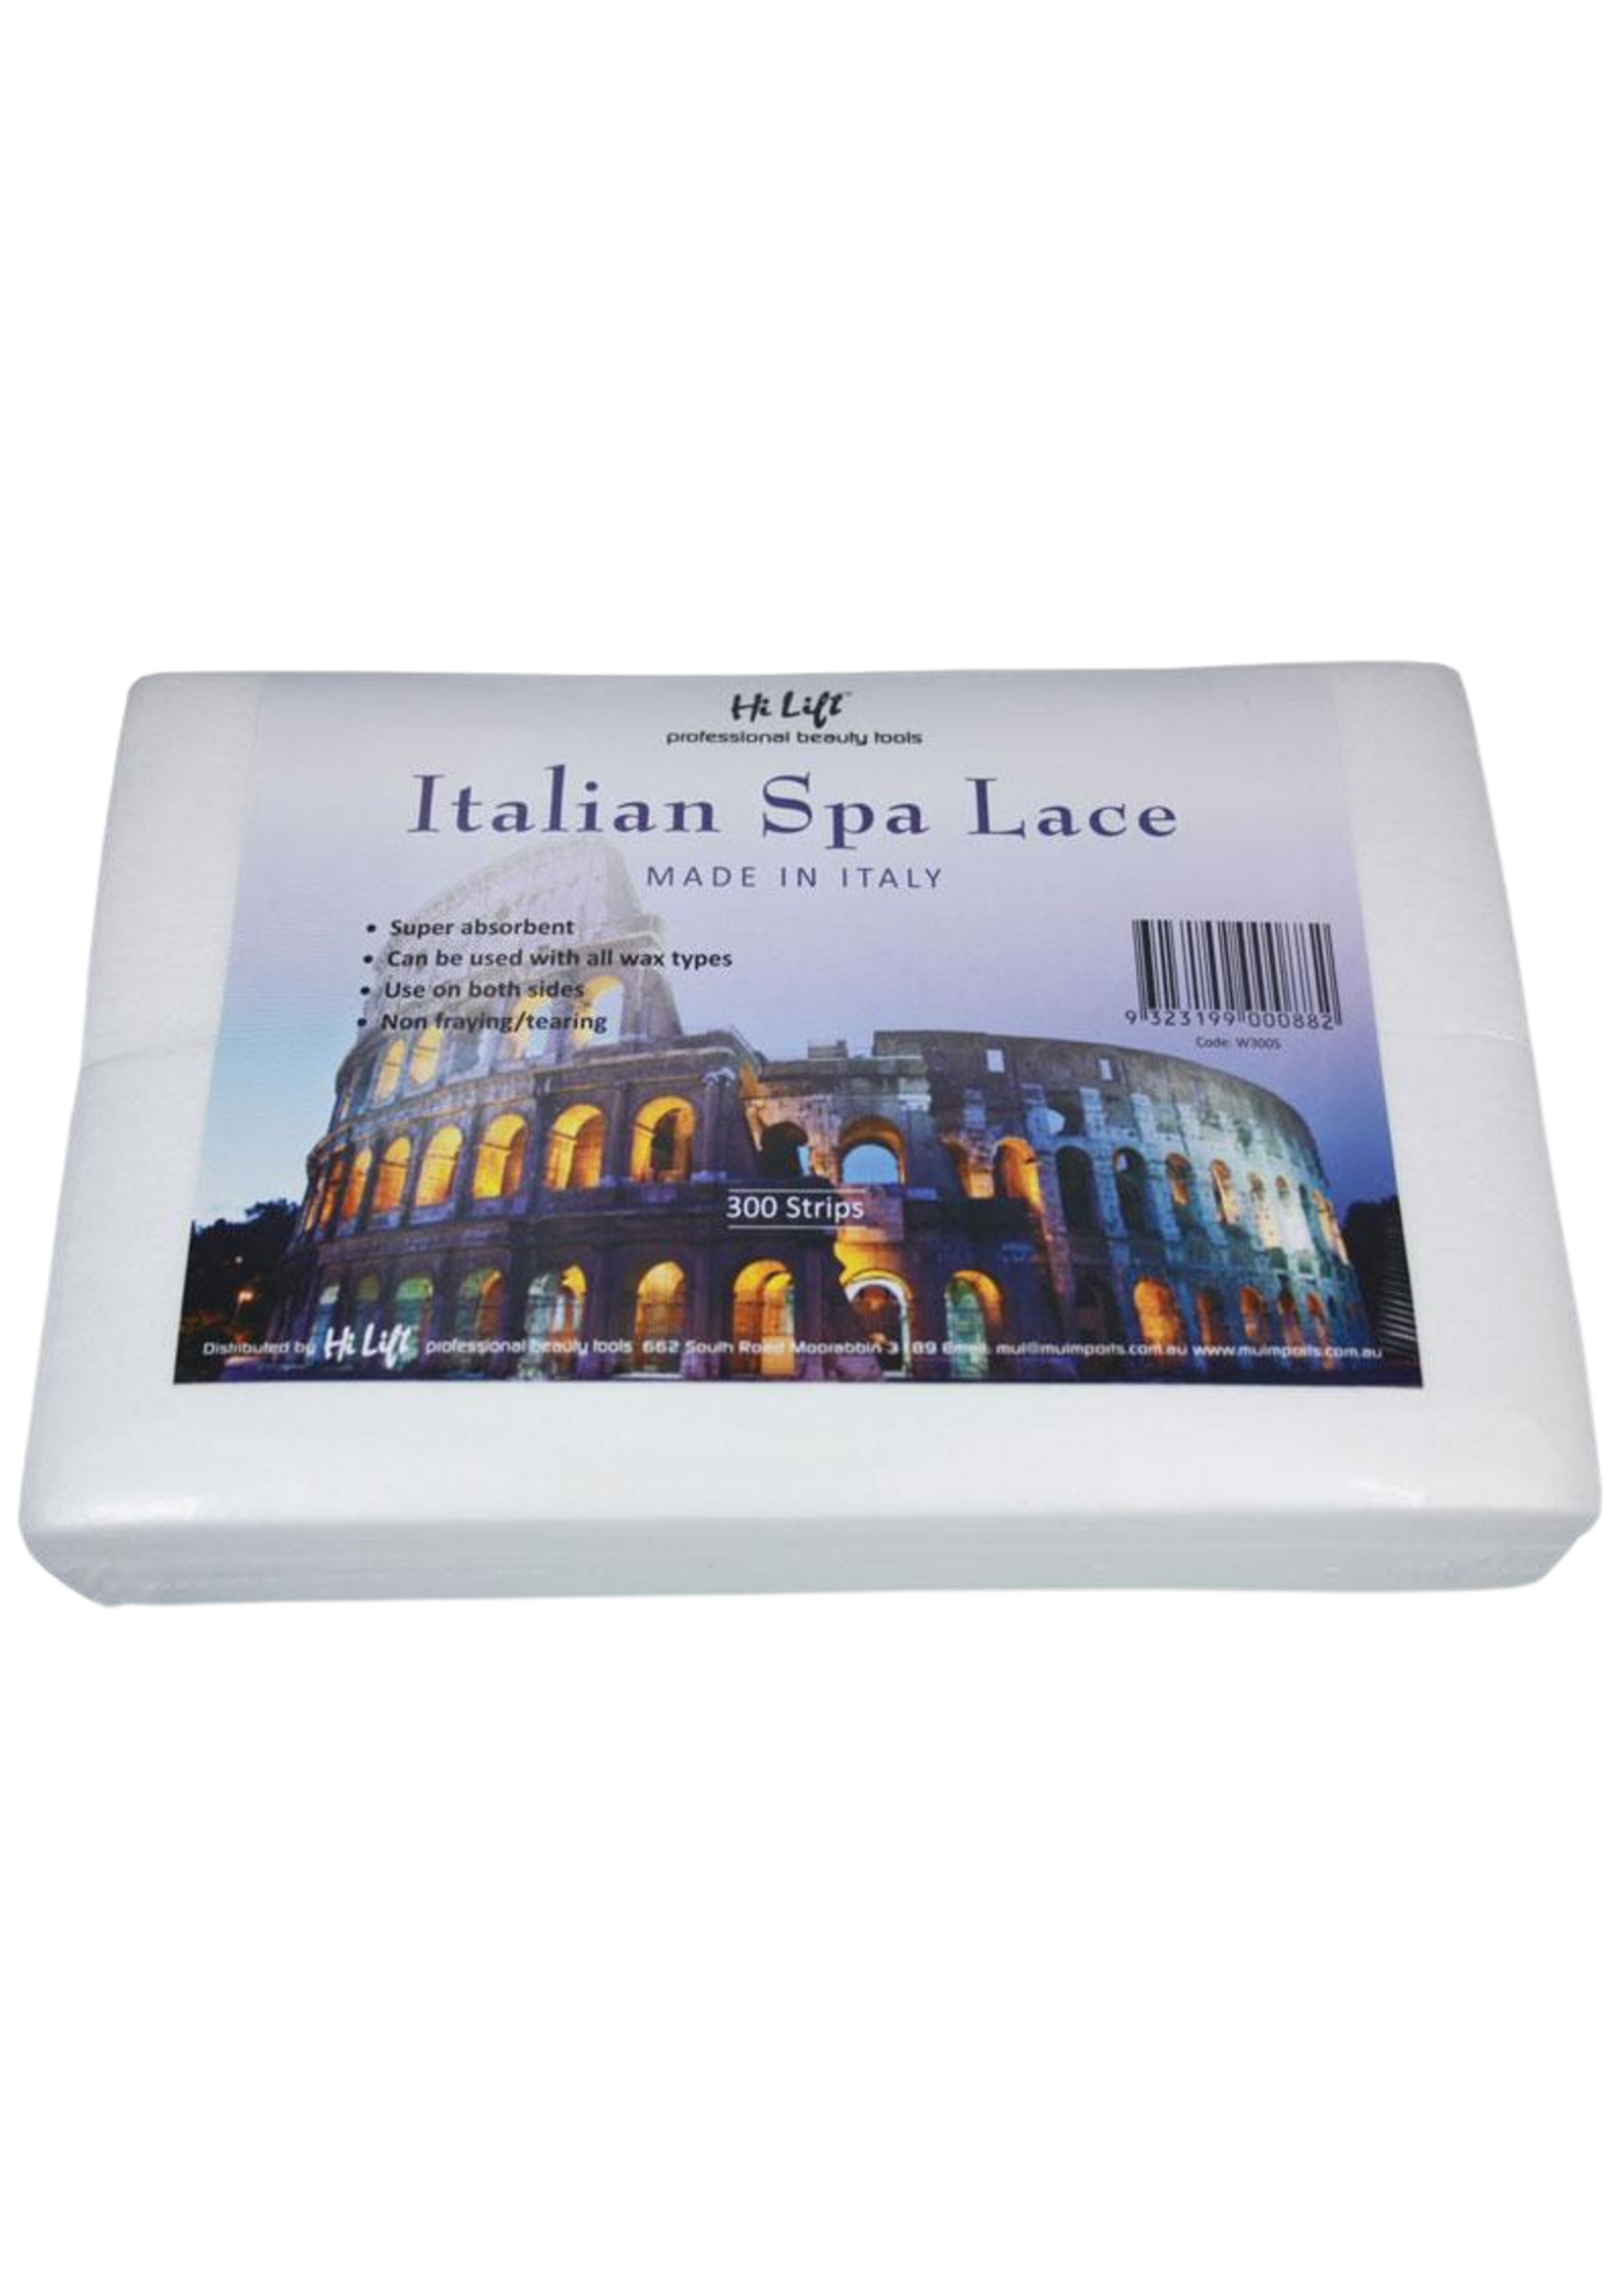 Hi Lift Hi Lift Italian Spa Lace Epilating Strips 300pk